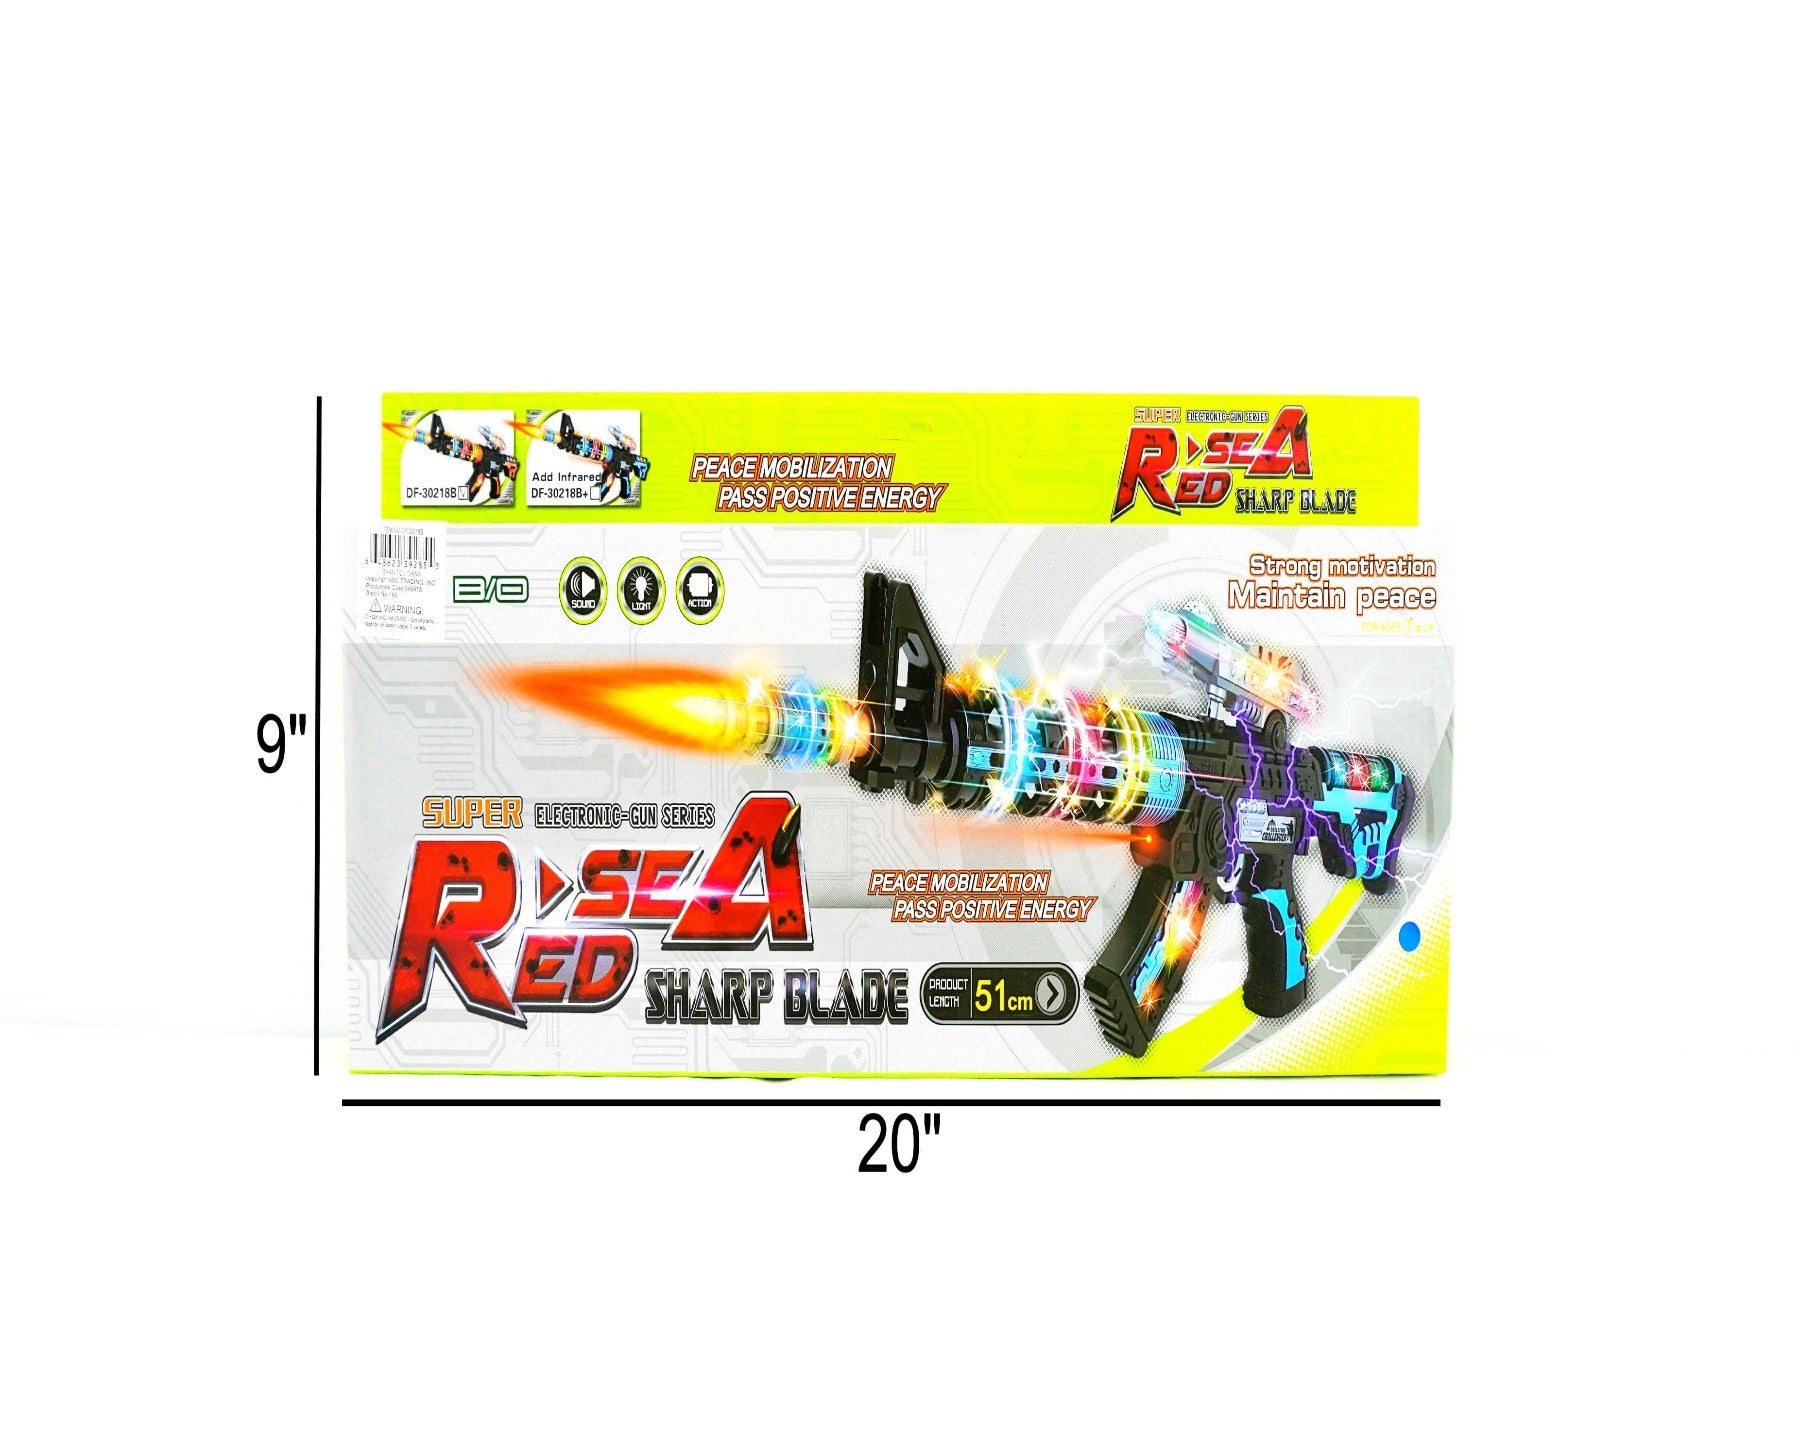 Red Sea - Super Electronic Gun